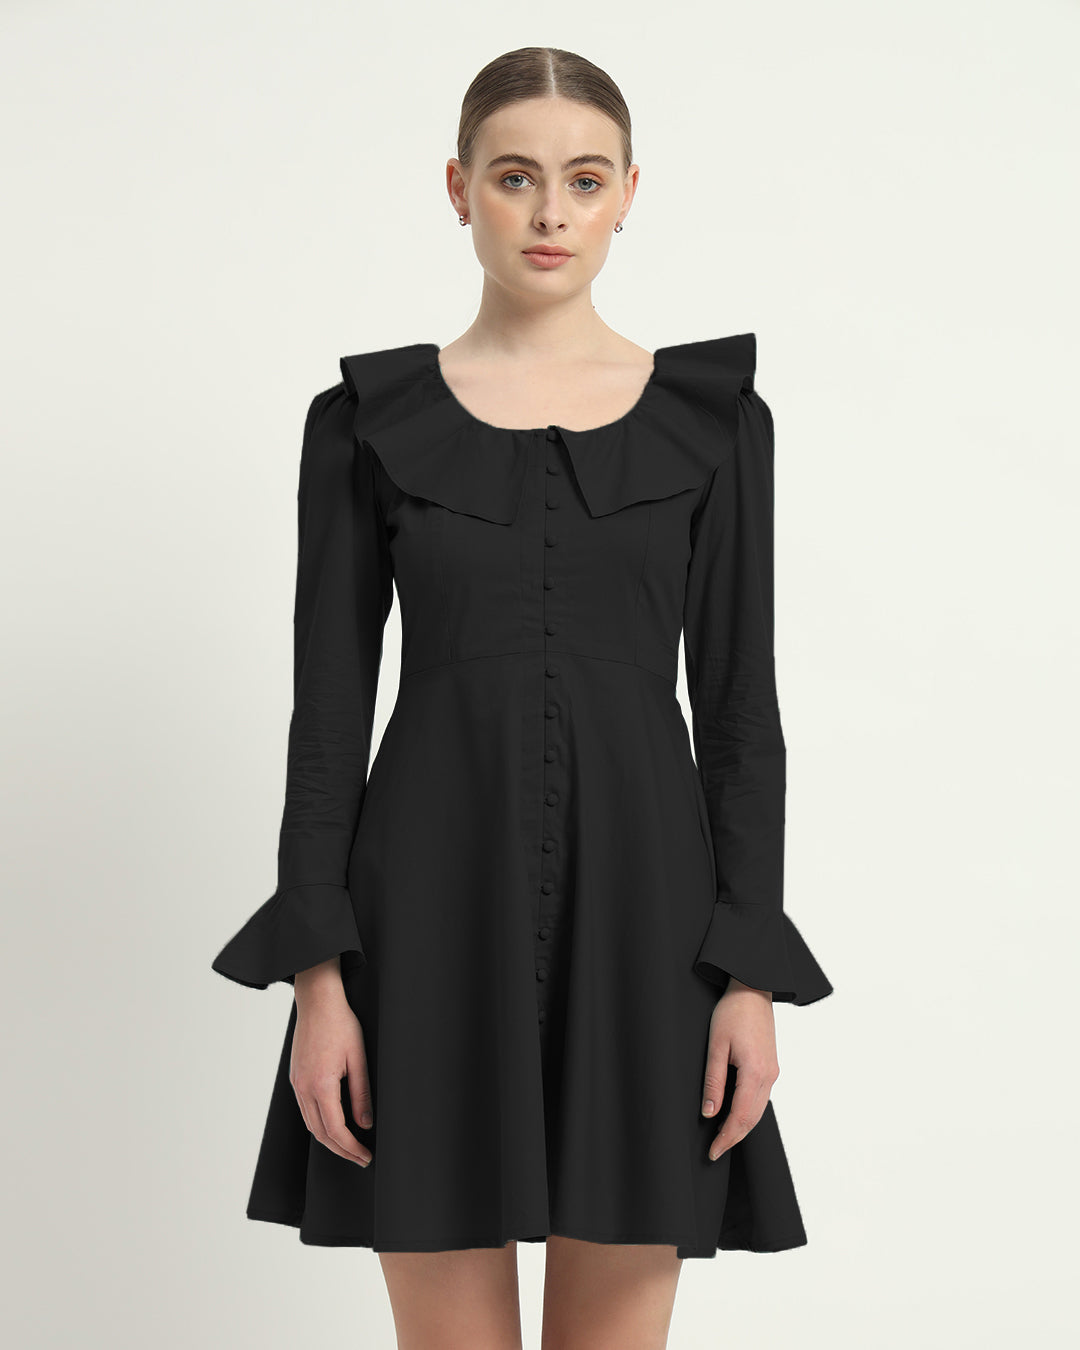 The Noir Fredonia Cotton Dress